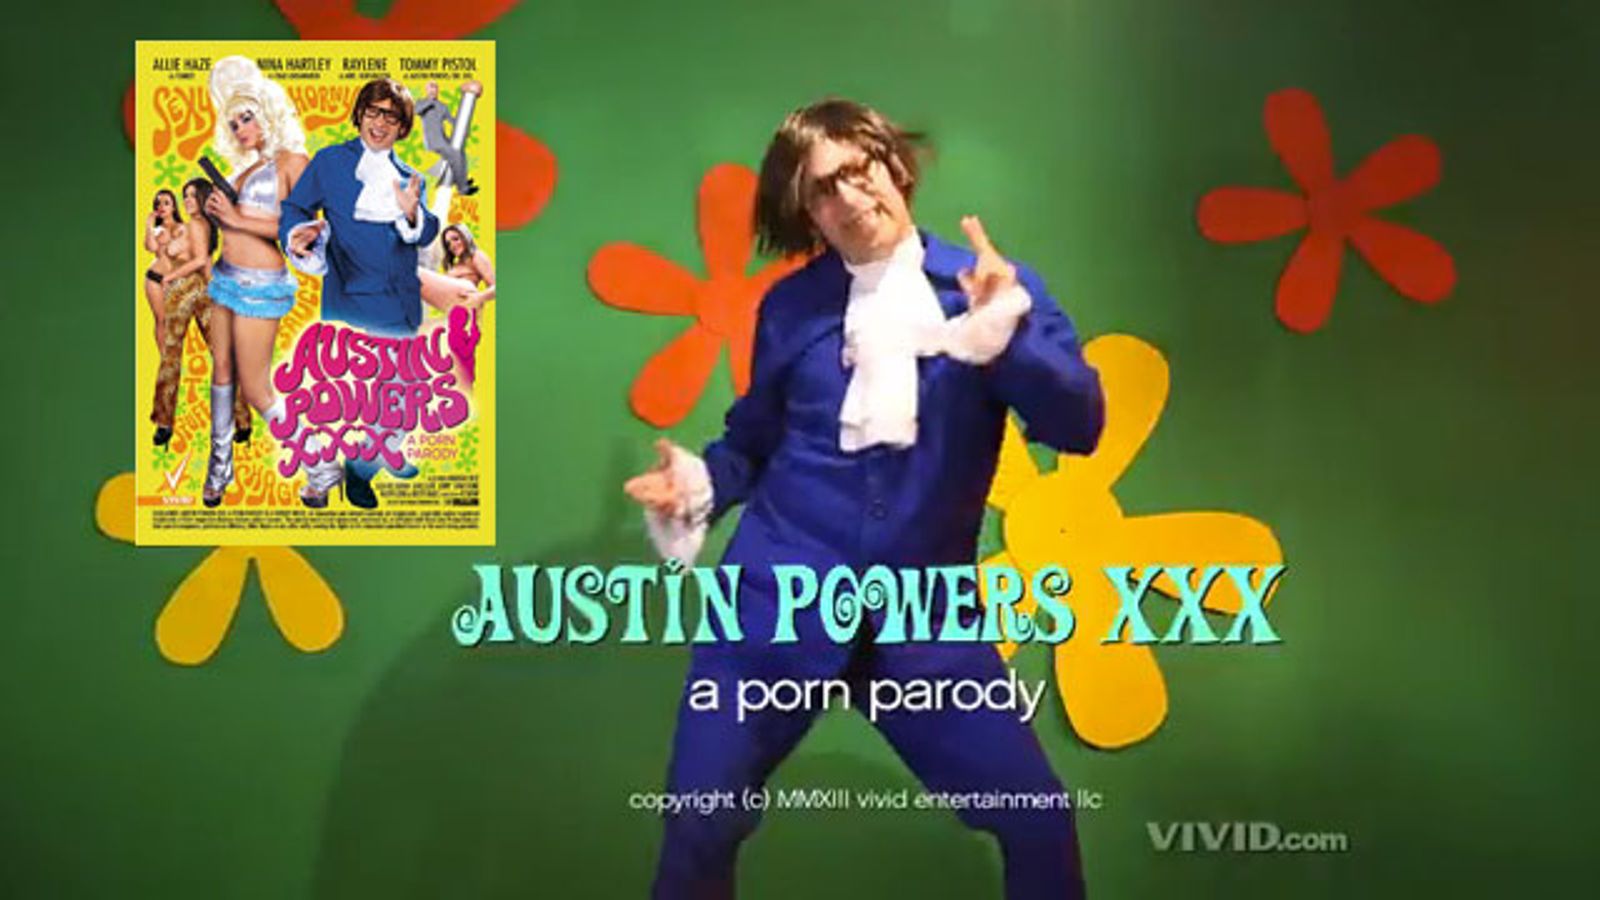 Vivid Releases 'Austin Powers' Parody